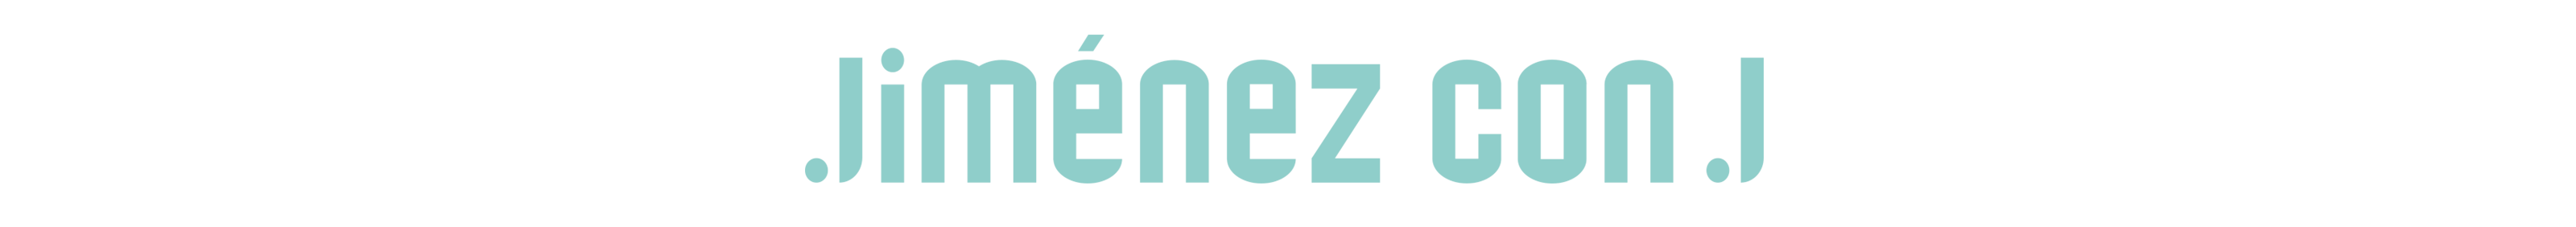 Banner de perfil de Jimenez conj